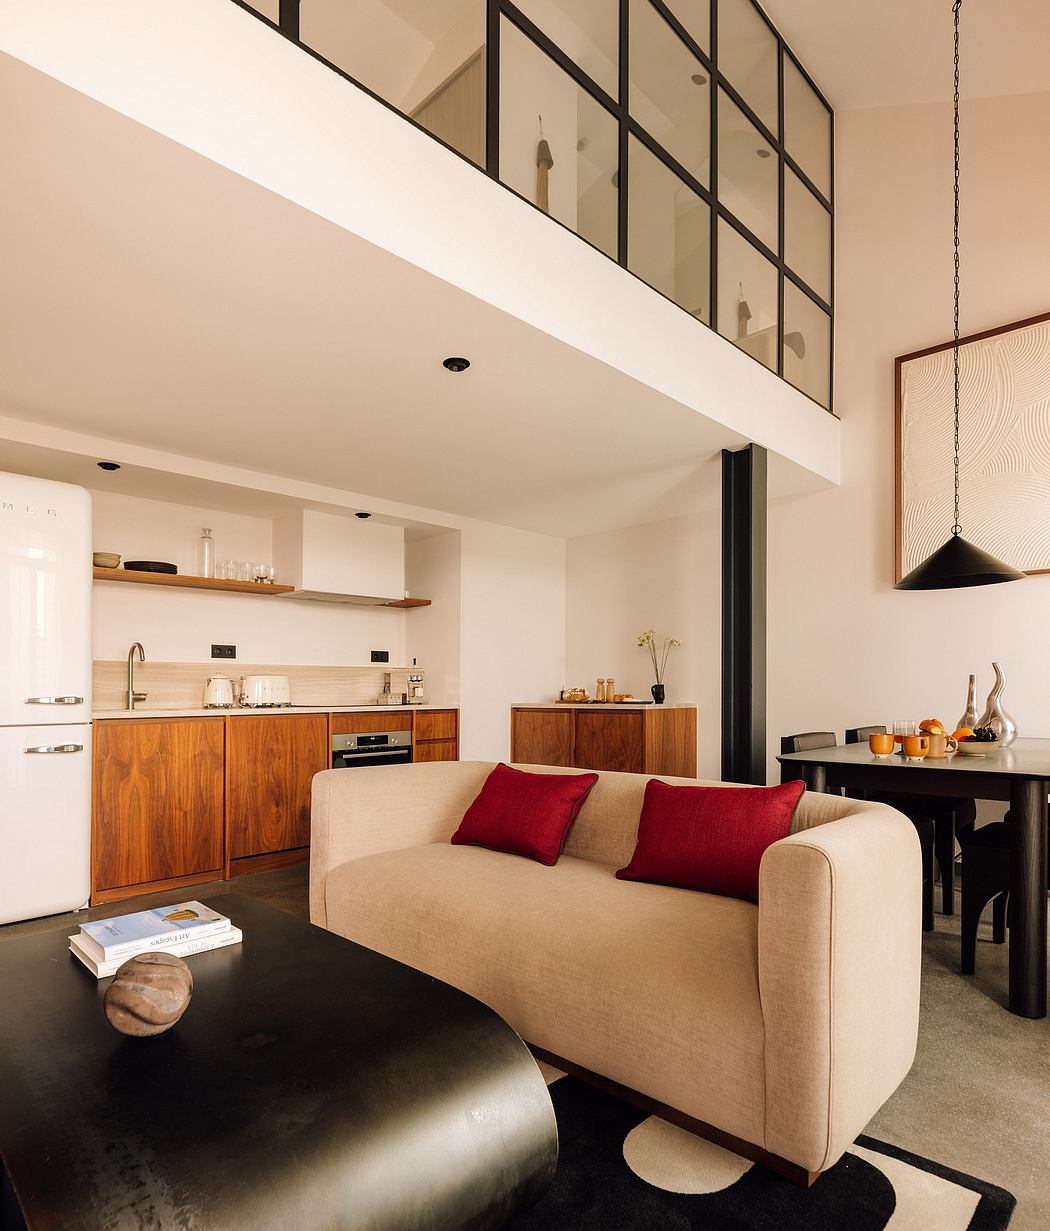 Loft-style interior with mezzanine and minimalist decor.